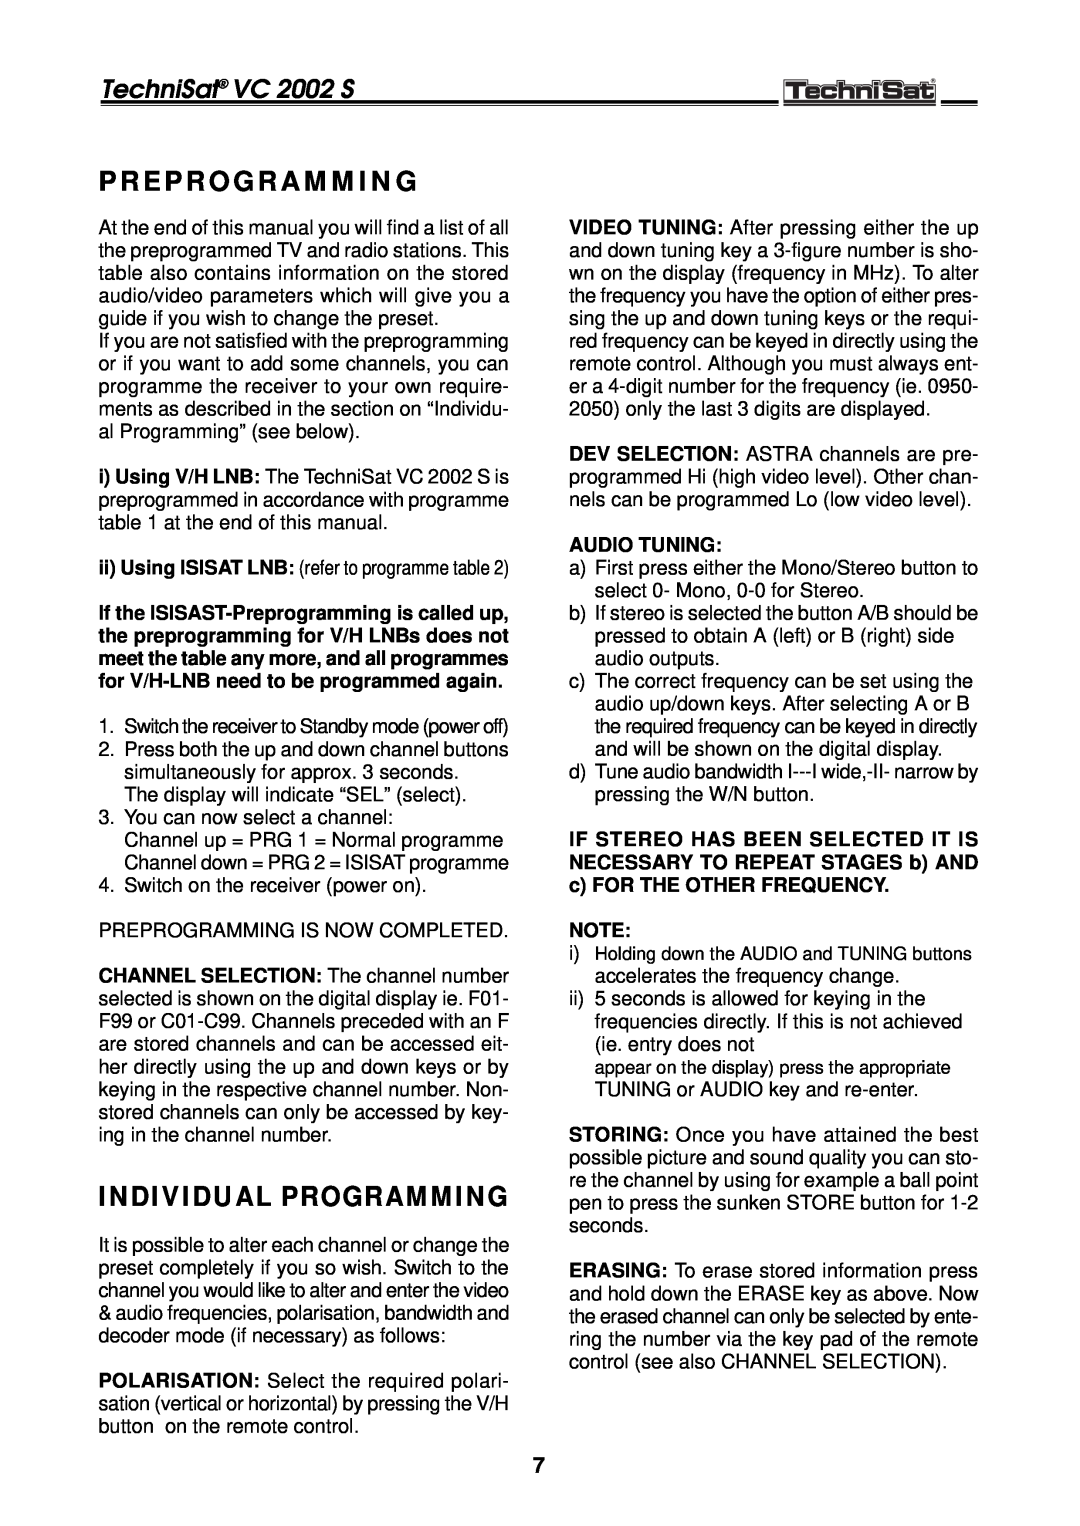 TechniSat manual Preprogramming, Individual Programming, TechniSat VC 2002 S, Audio Tuning 